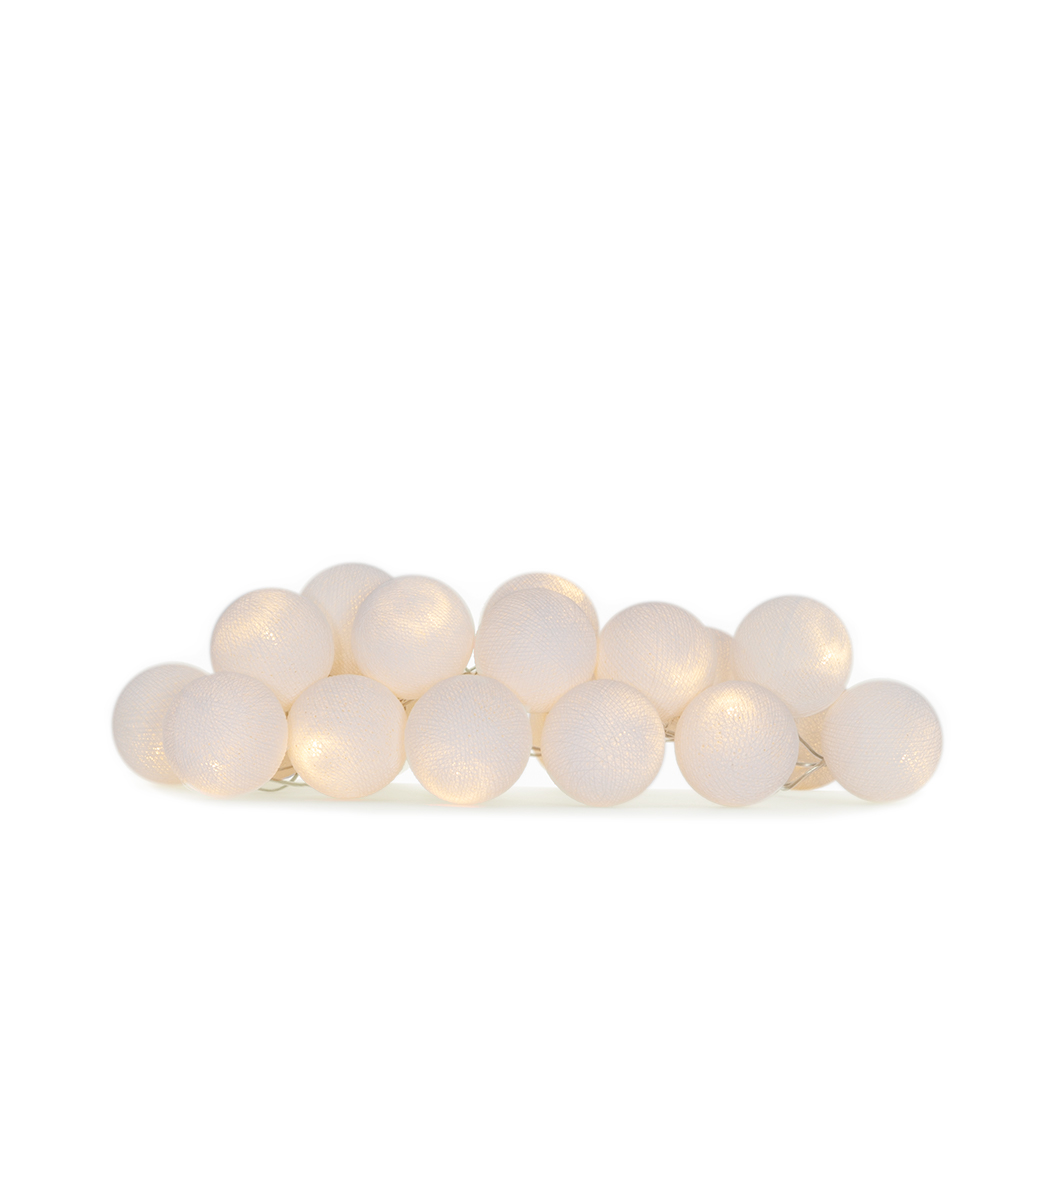 Lichterkette „White“ 20 Balls